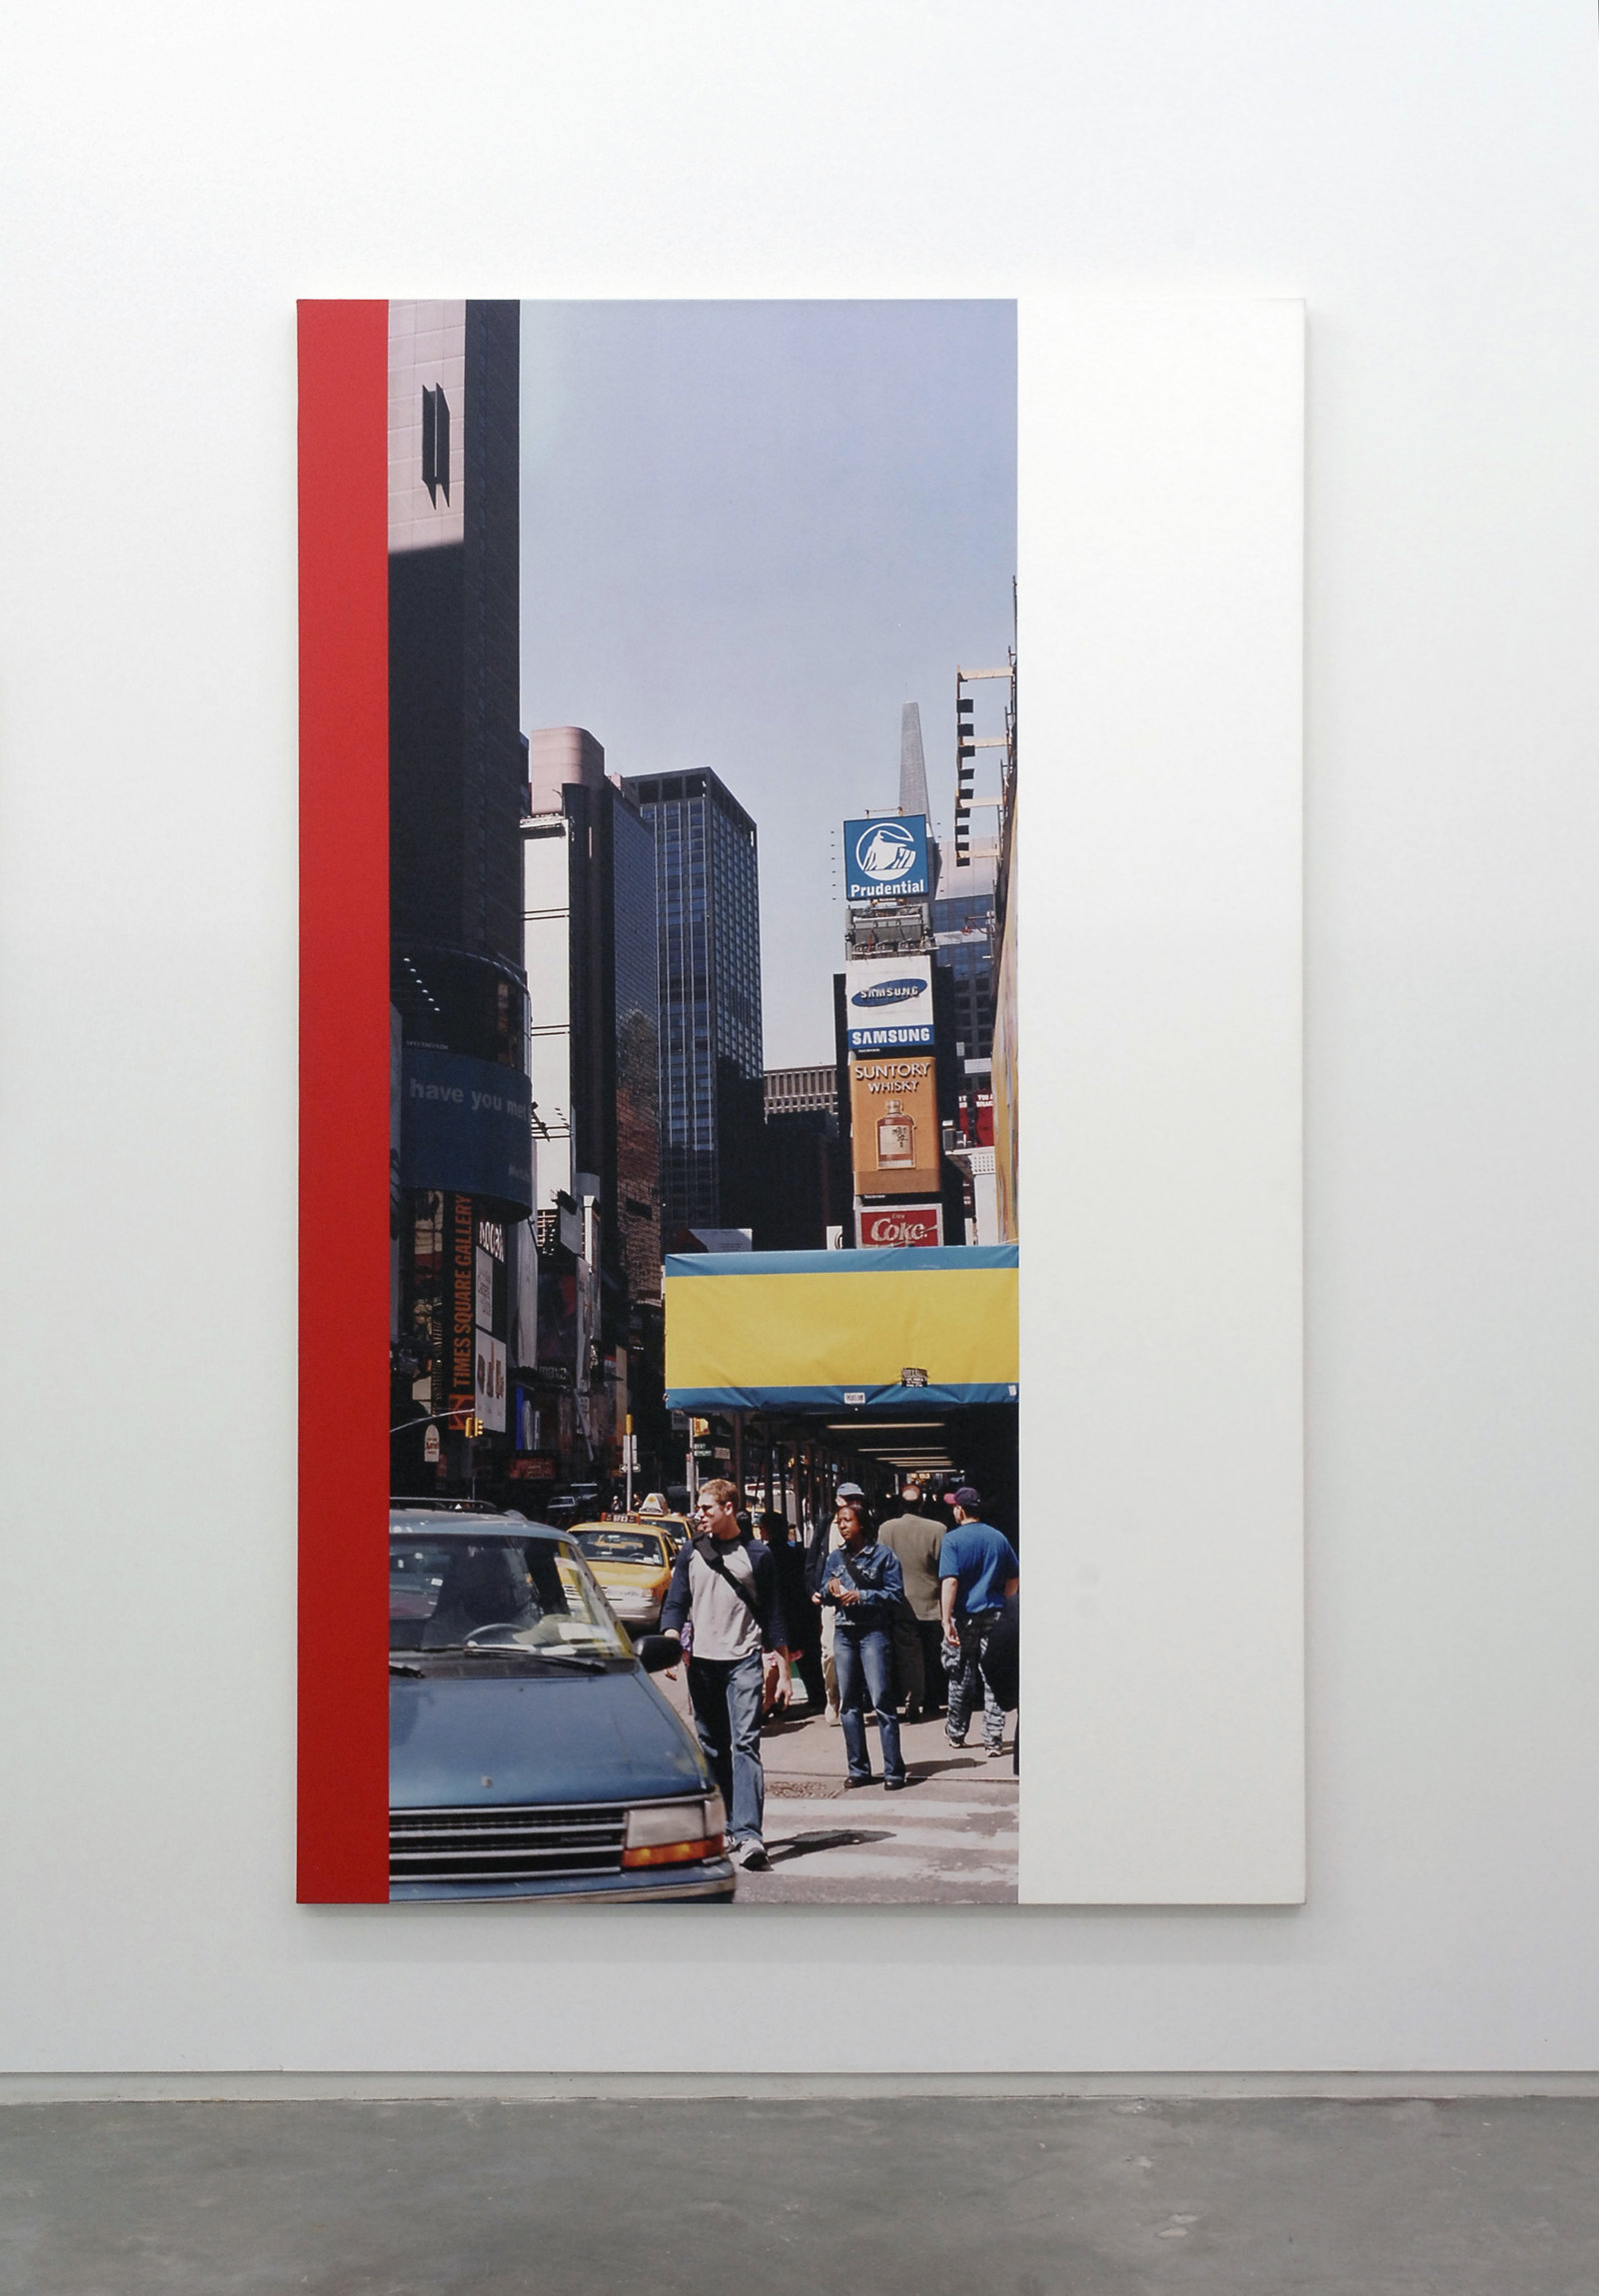 Ian Wallace, Jazz Street II, 2001, photolaminate with acrylic on canvas, 96 x 60 in. (244 x 152 cm)